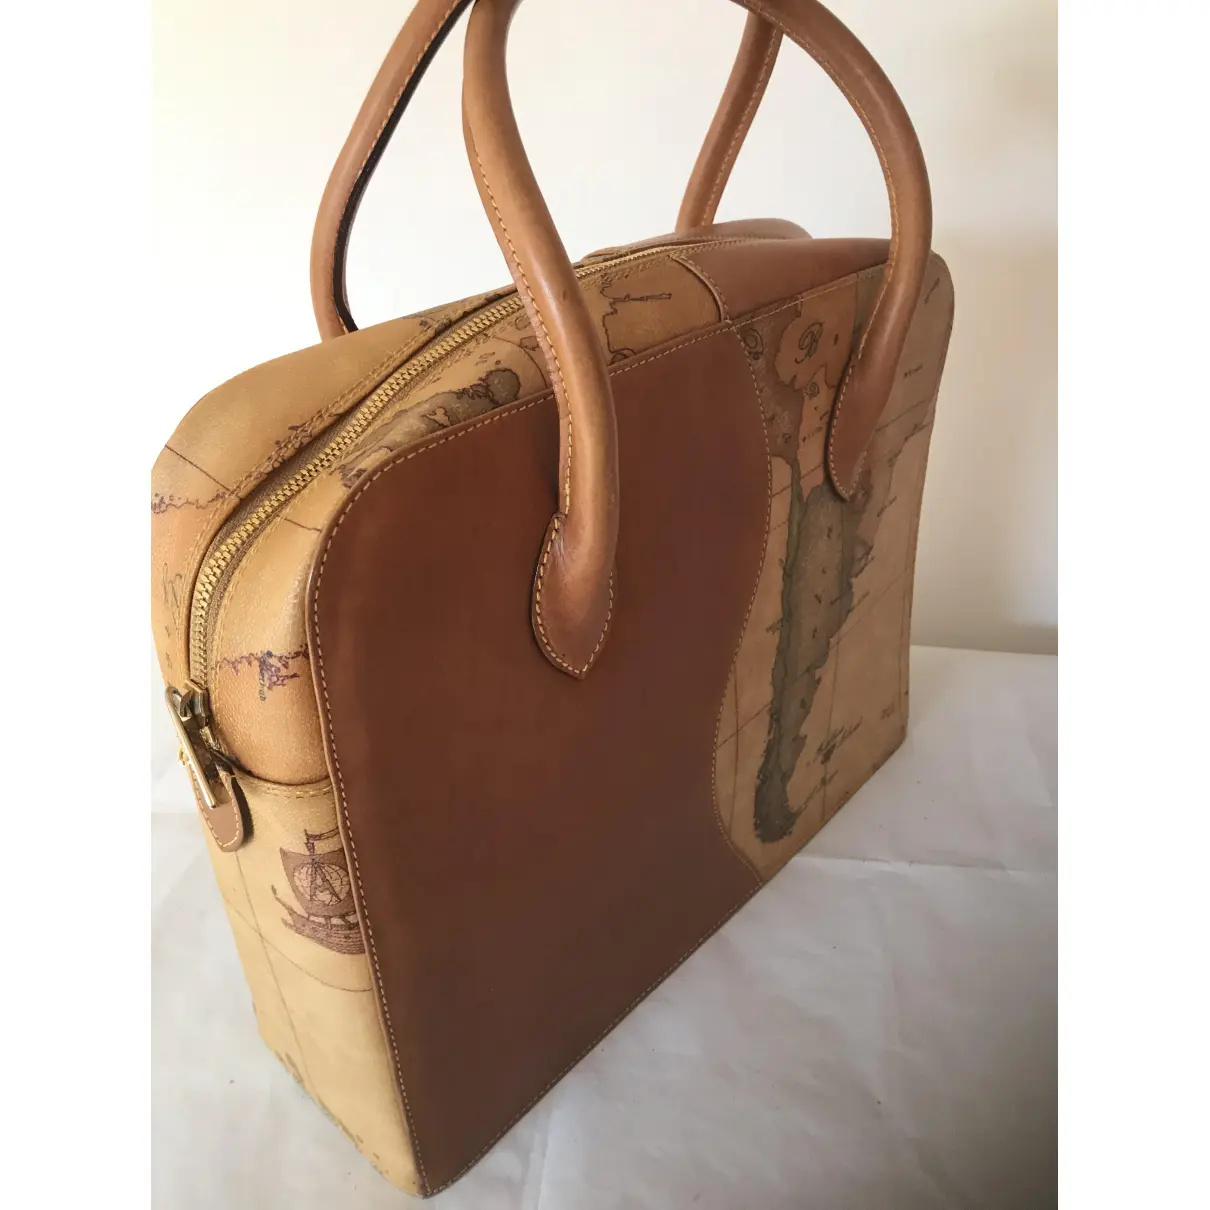 Buy Prima classe Leather handbag online